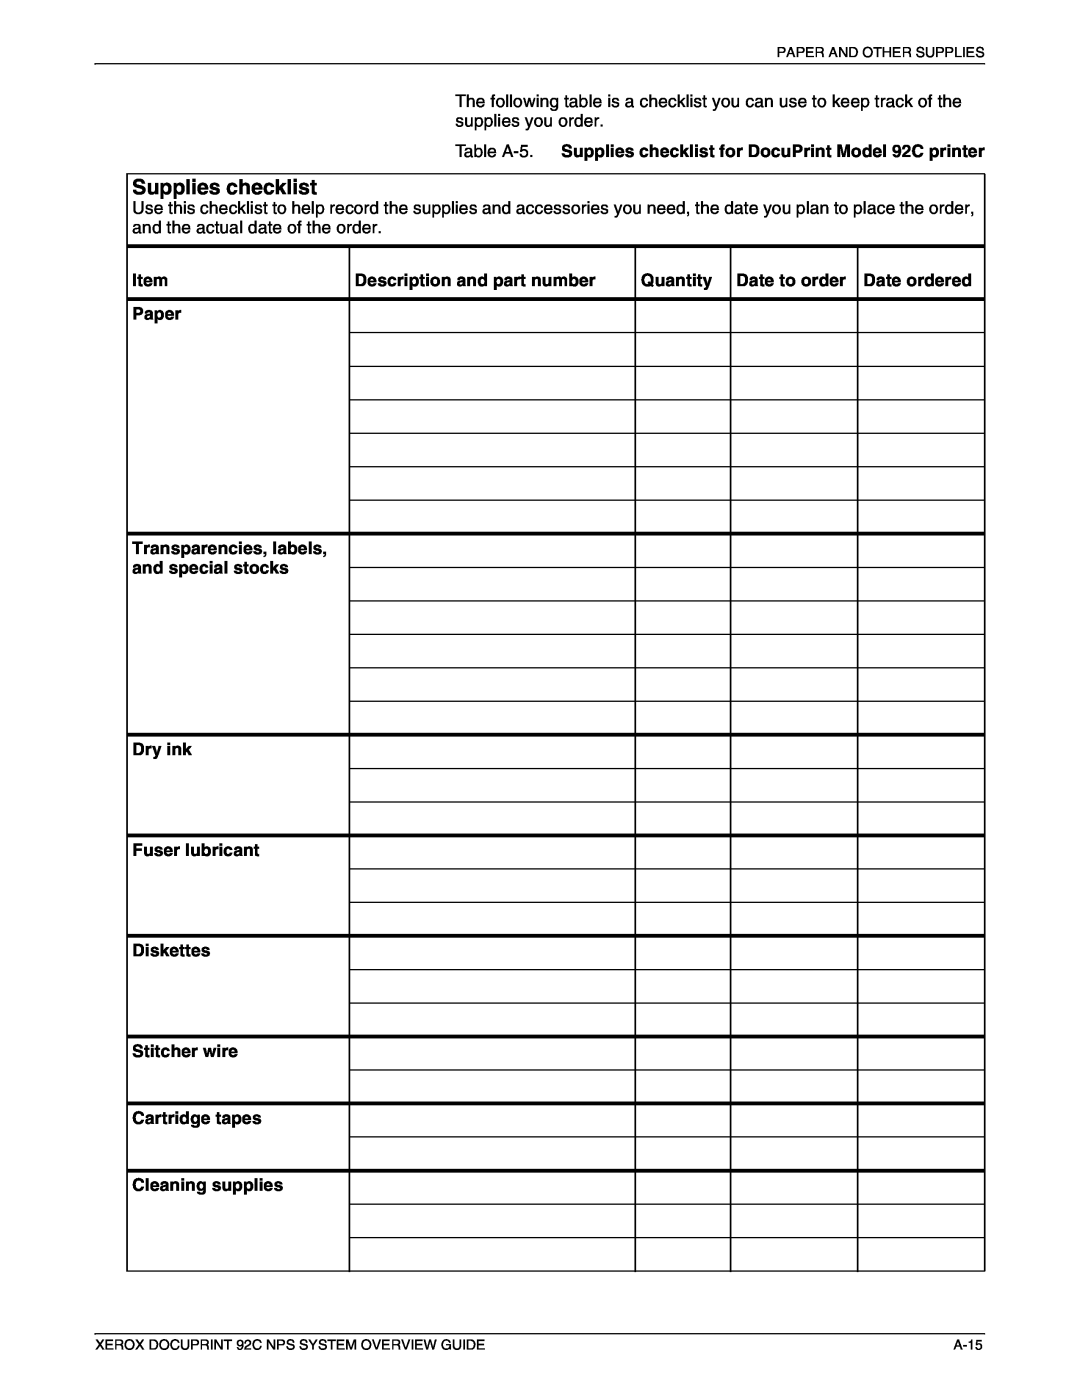 Xerox 92C NPS Table A-5. Supplies checklist for DocuPrint Model 92C printer, Description and part number, Quantity 